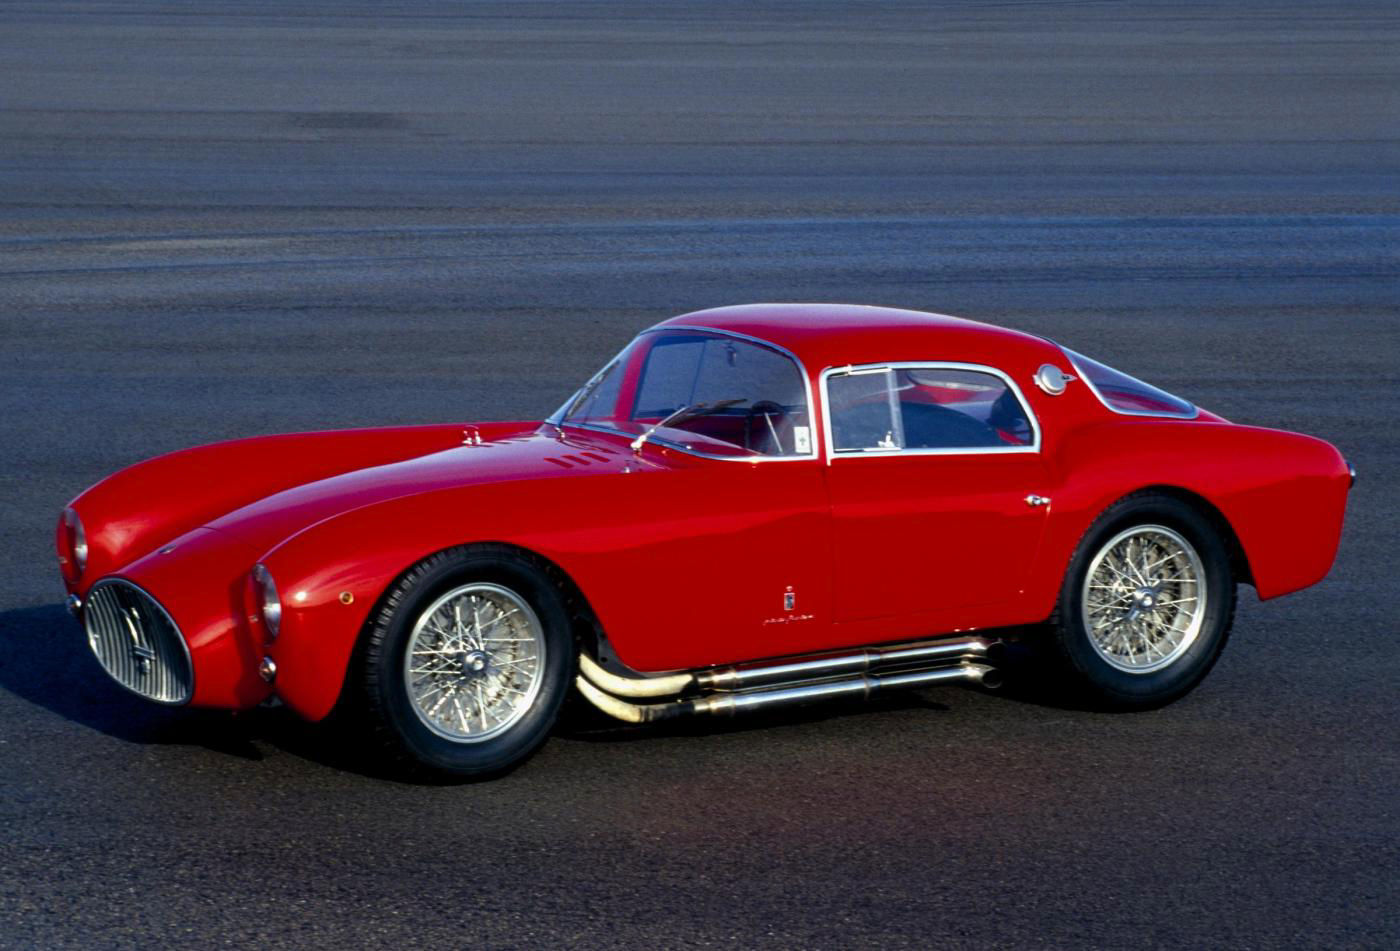 Maserati Classic - Berlinetta A6GCS - carrosserie rouge - vue latérale